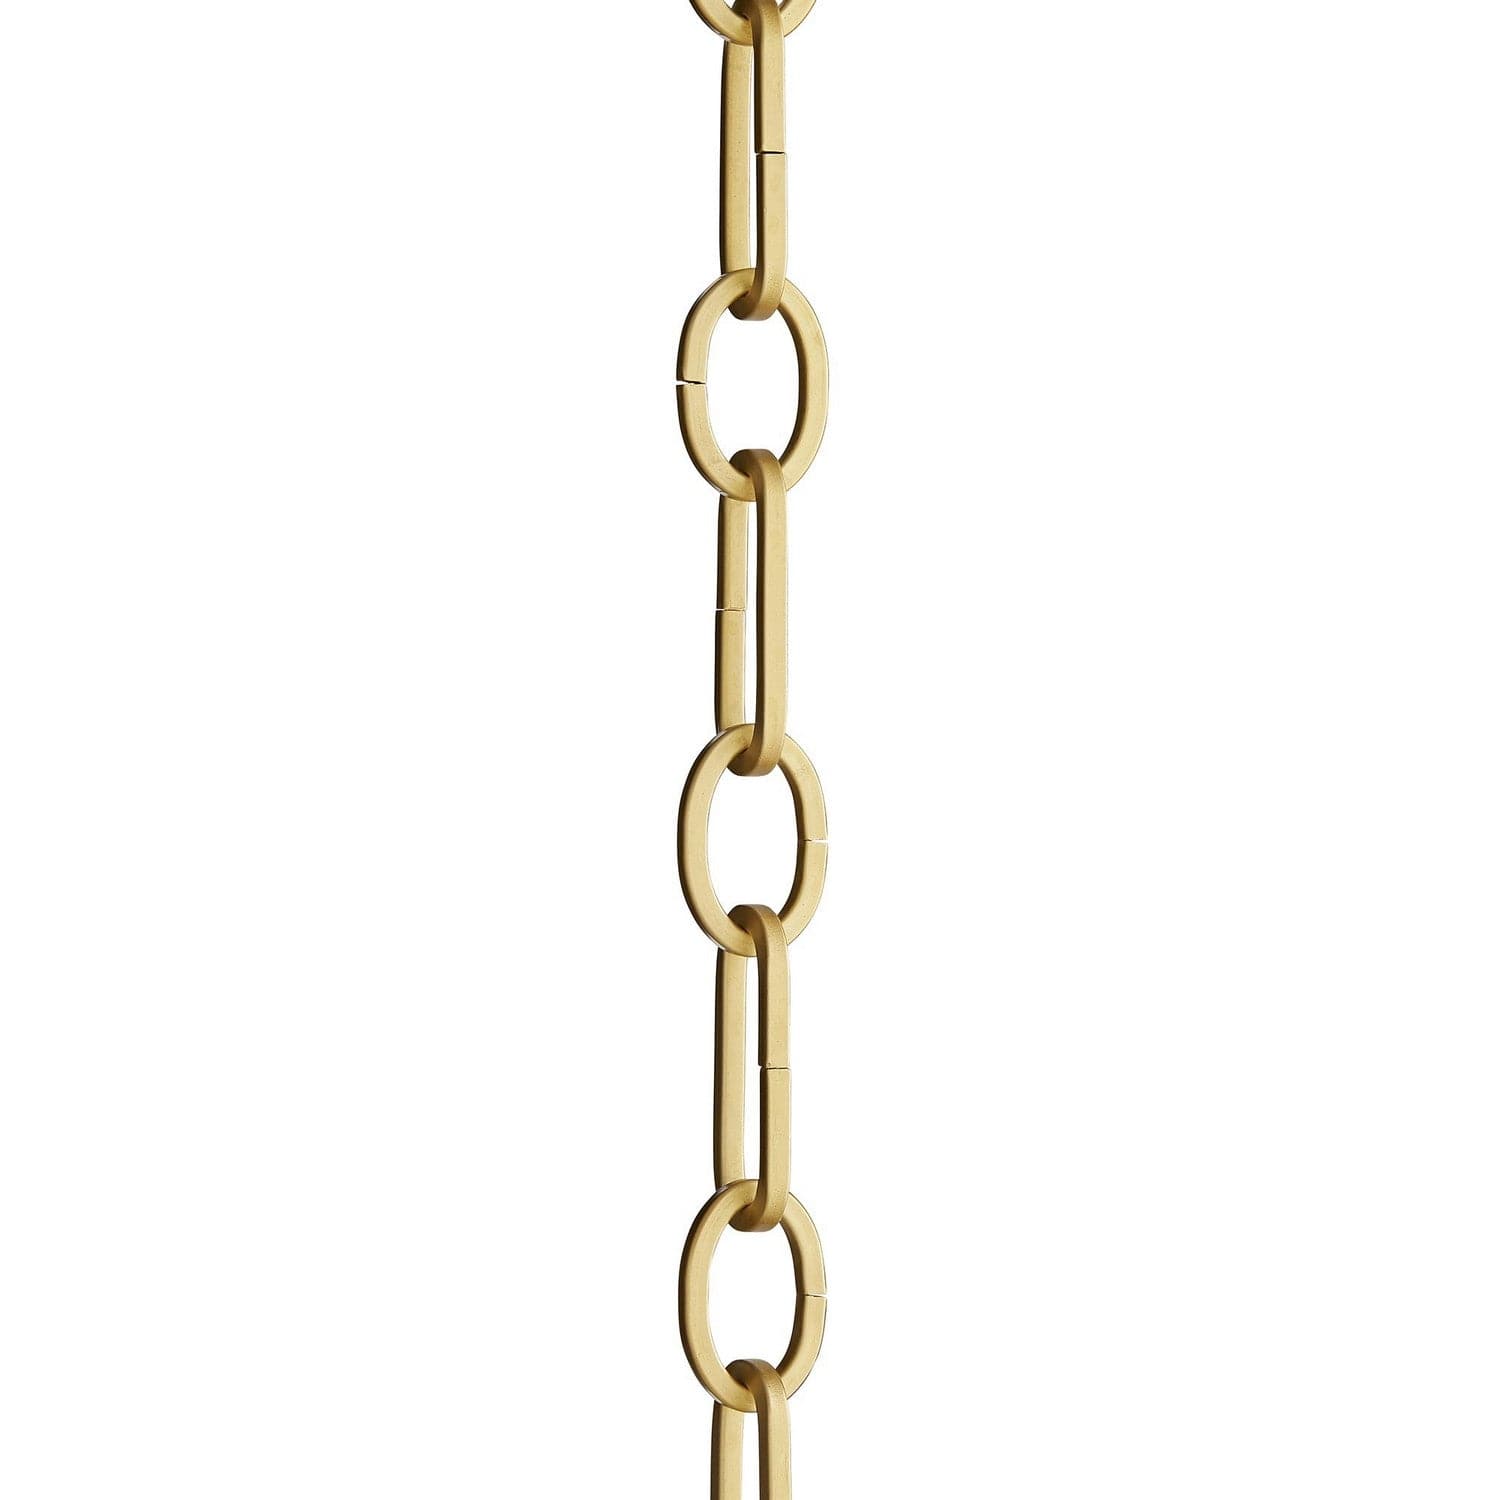 Arteriors - CHN-149 - 3` Extension Chain - Chain - Antique Brass